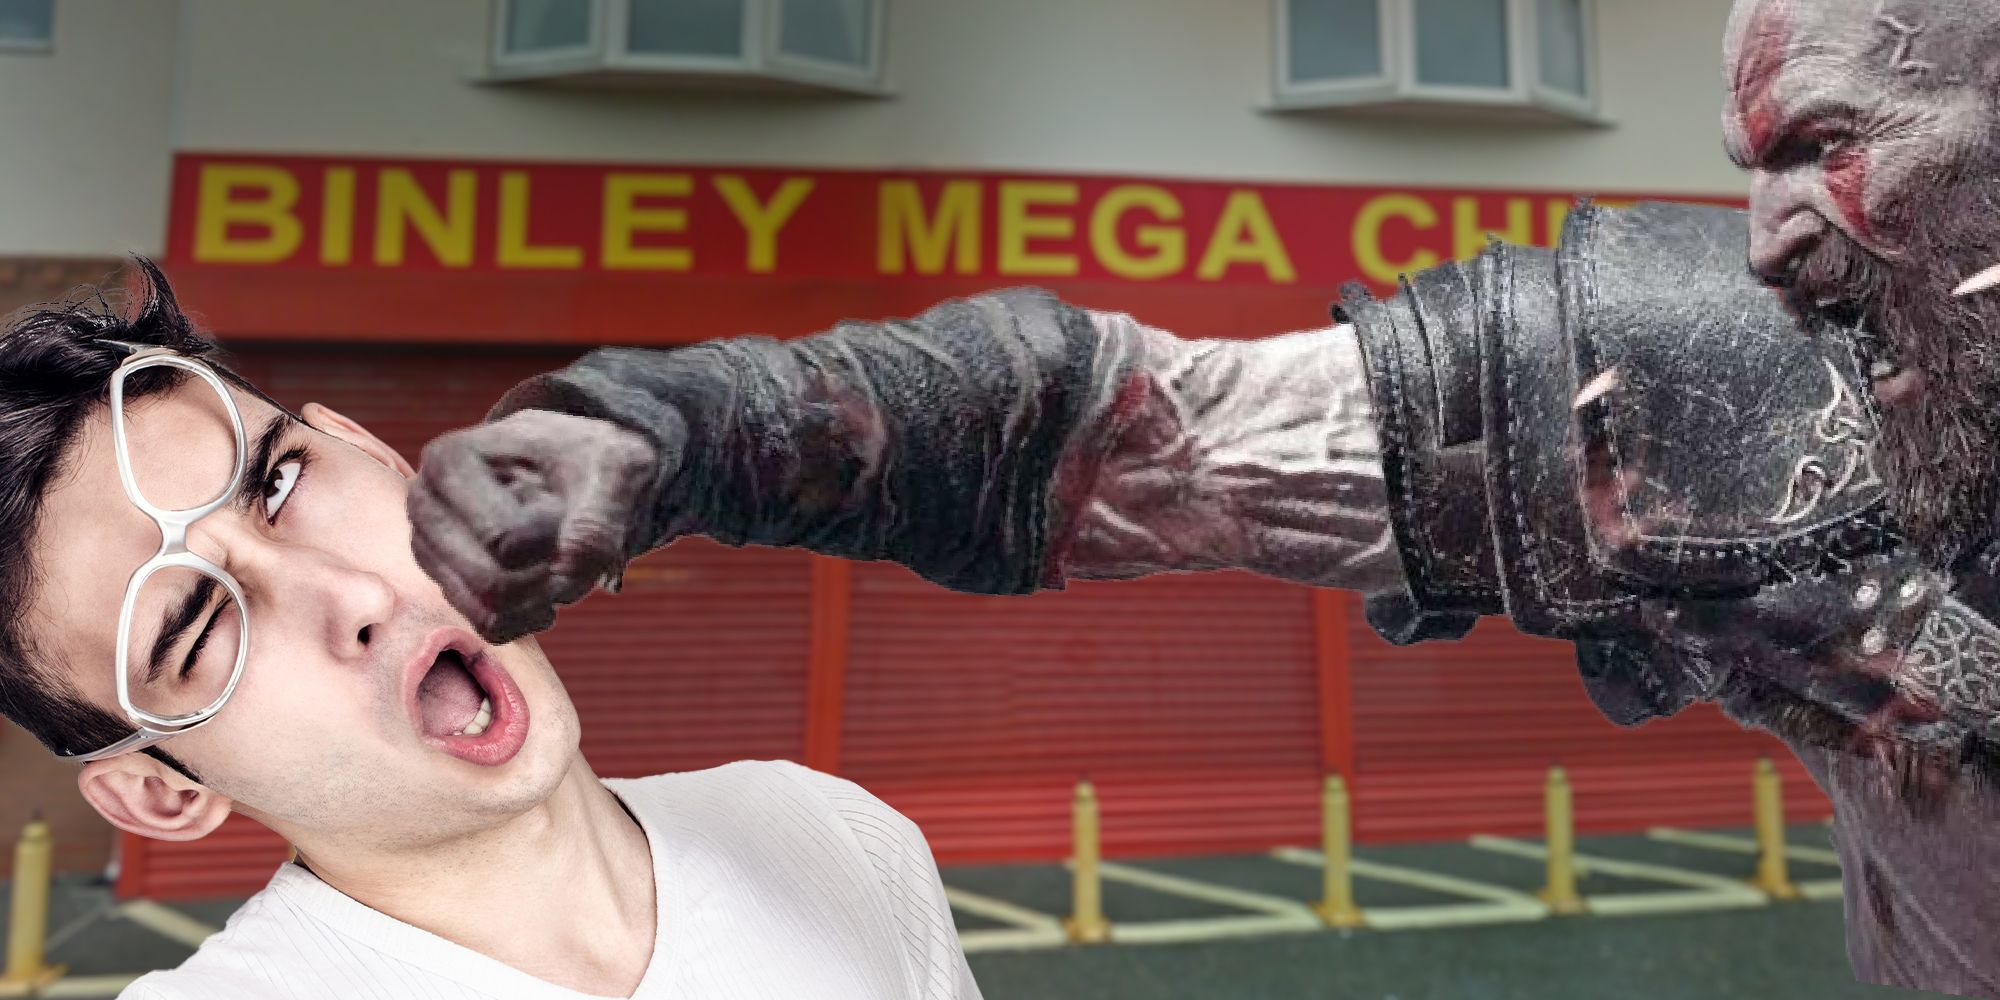 Custom Image - Kratos decking a kid outside Binley mega chippy